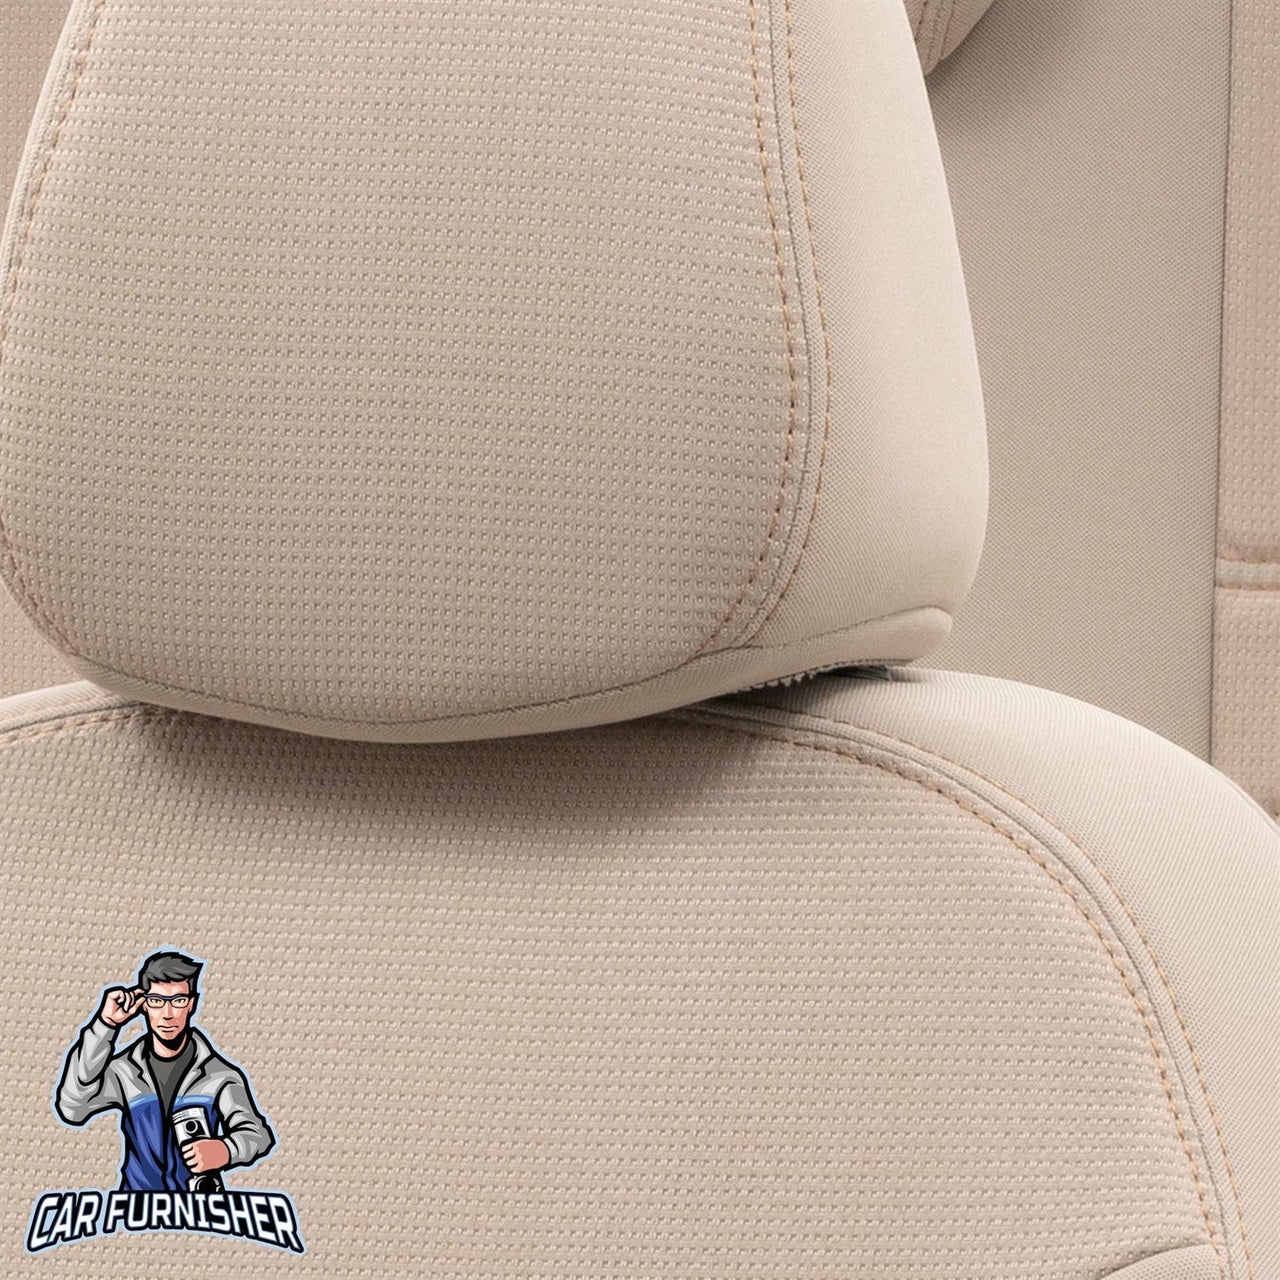 Chevrolet Spark Seat Covers Original Jacquard Design Beige Jacquard Fabric